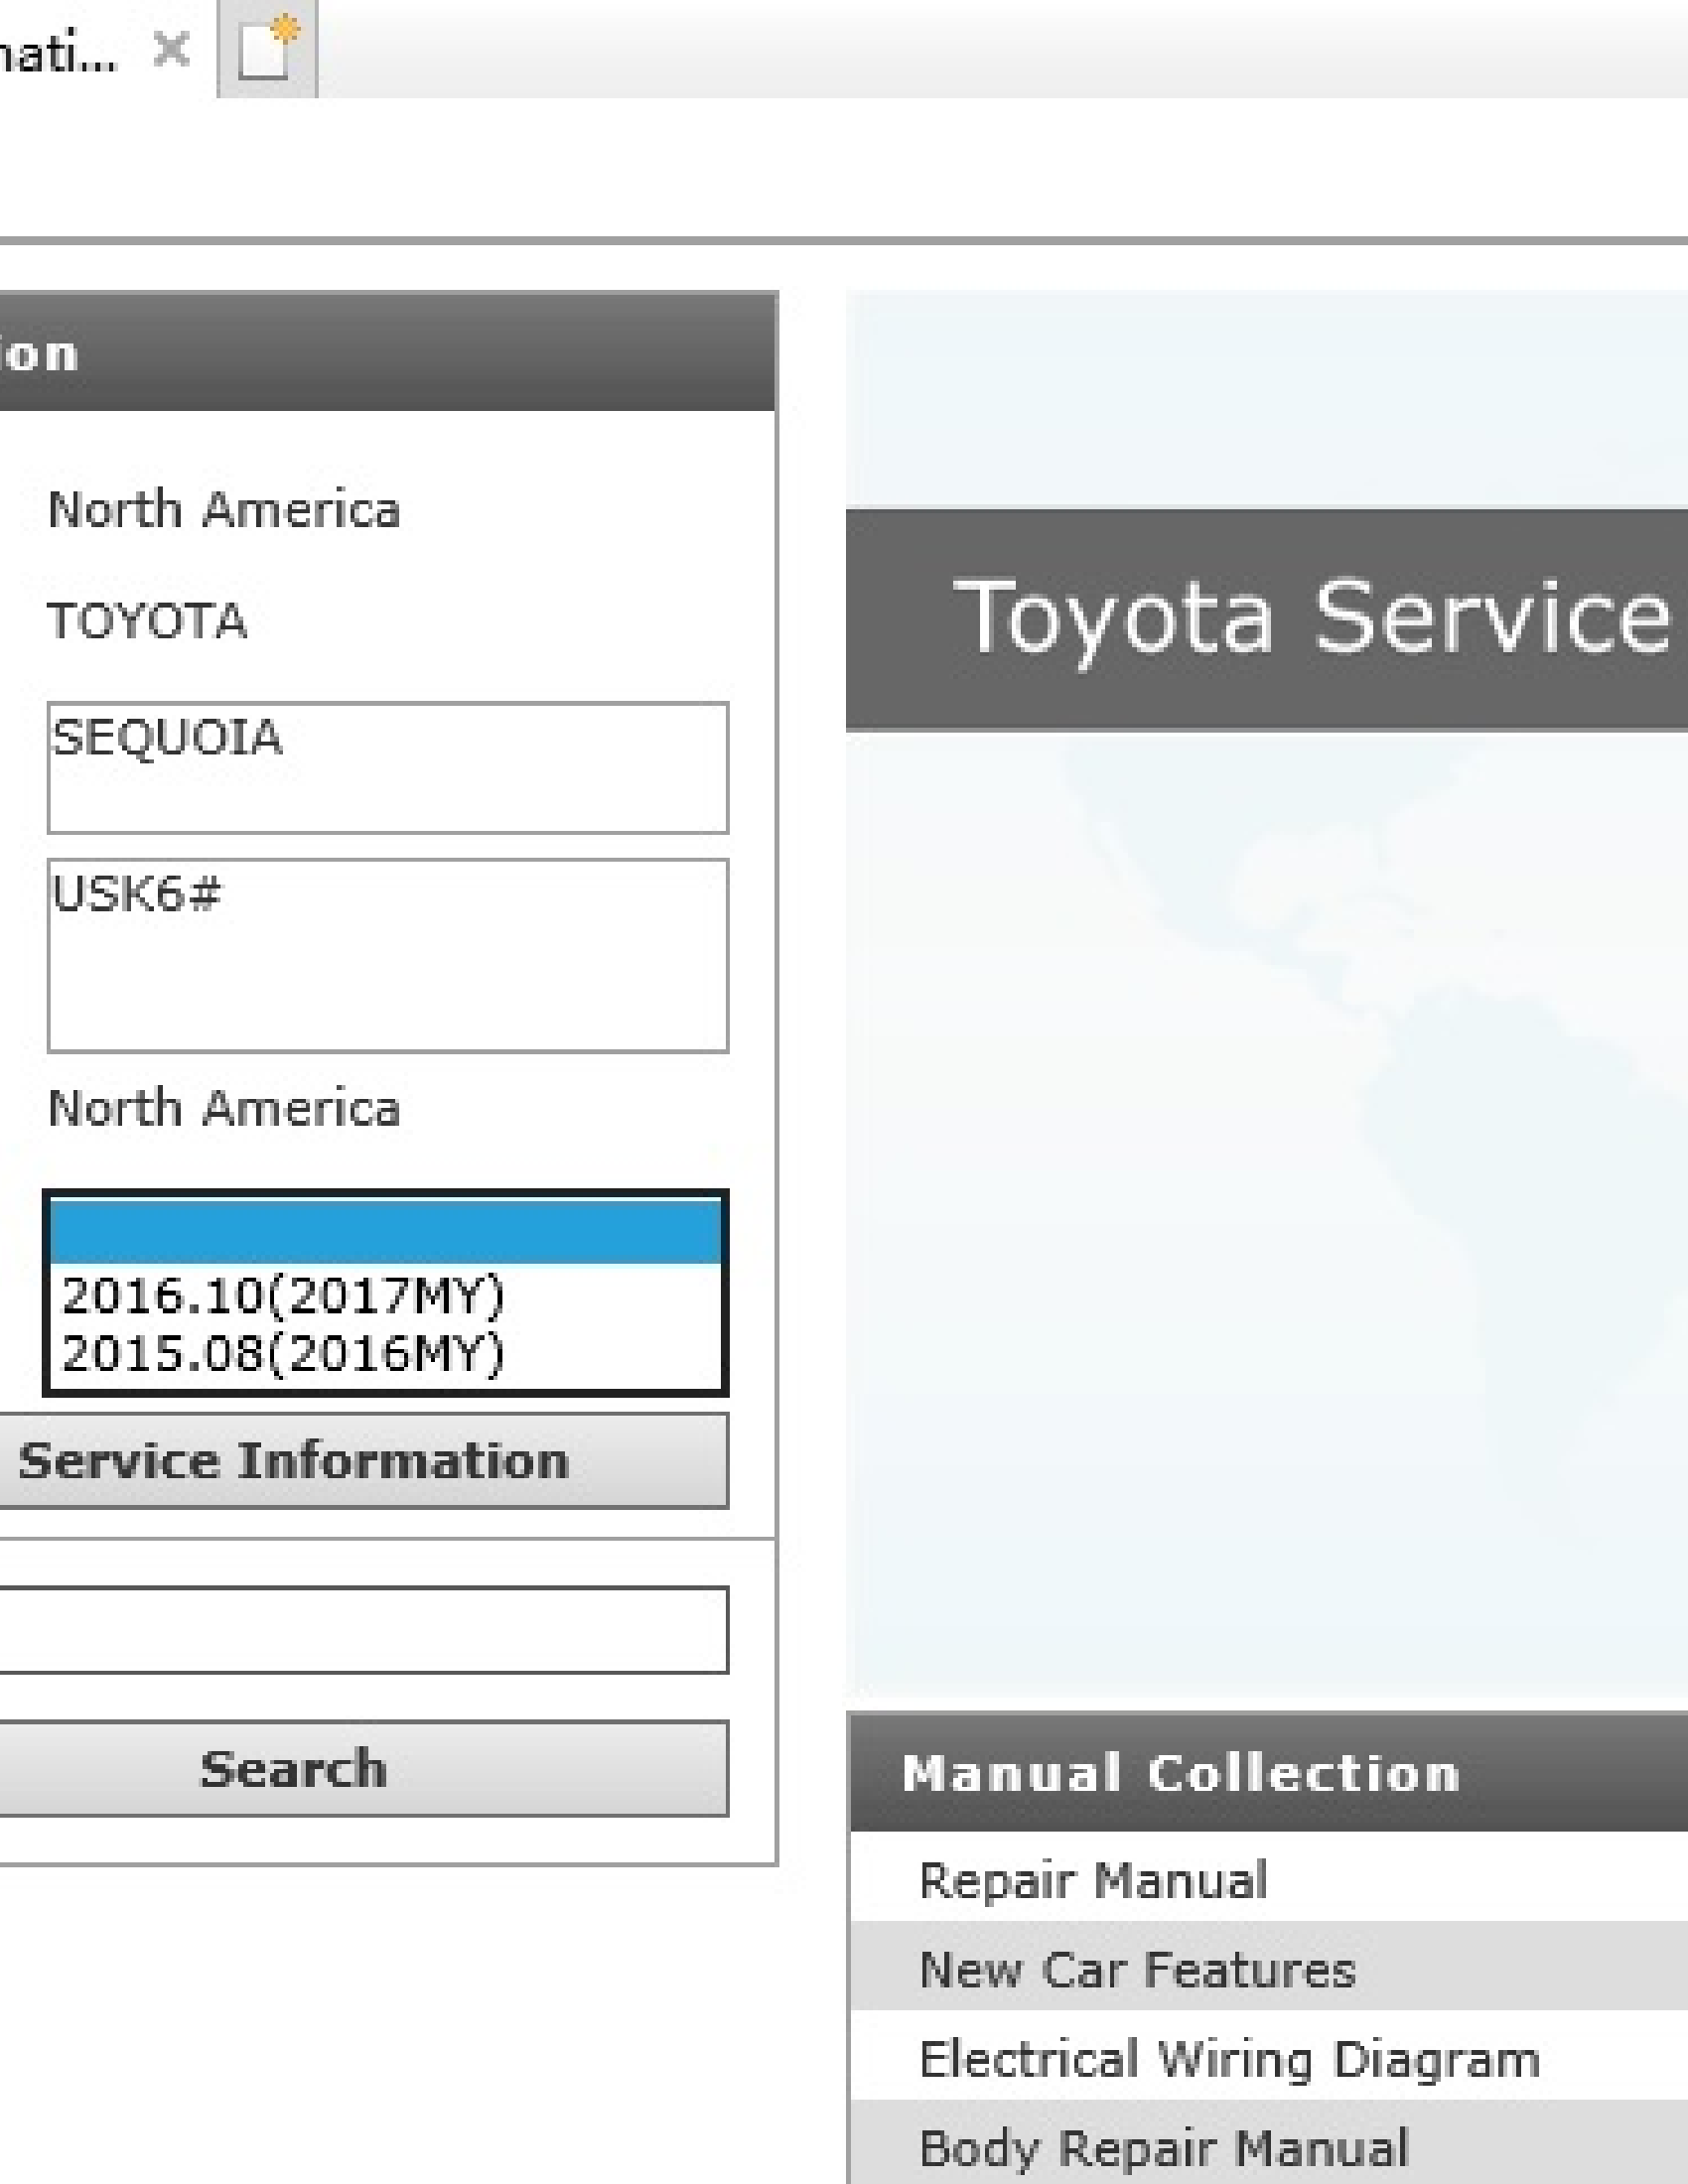 Toyota (USK6#) SEQUOIA manual